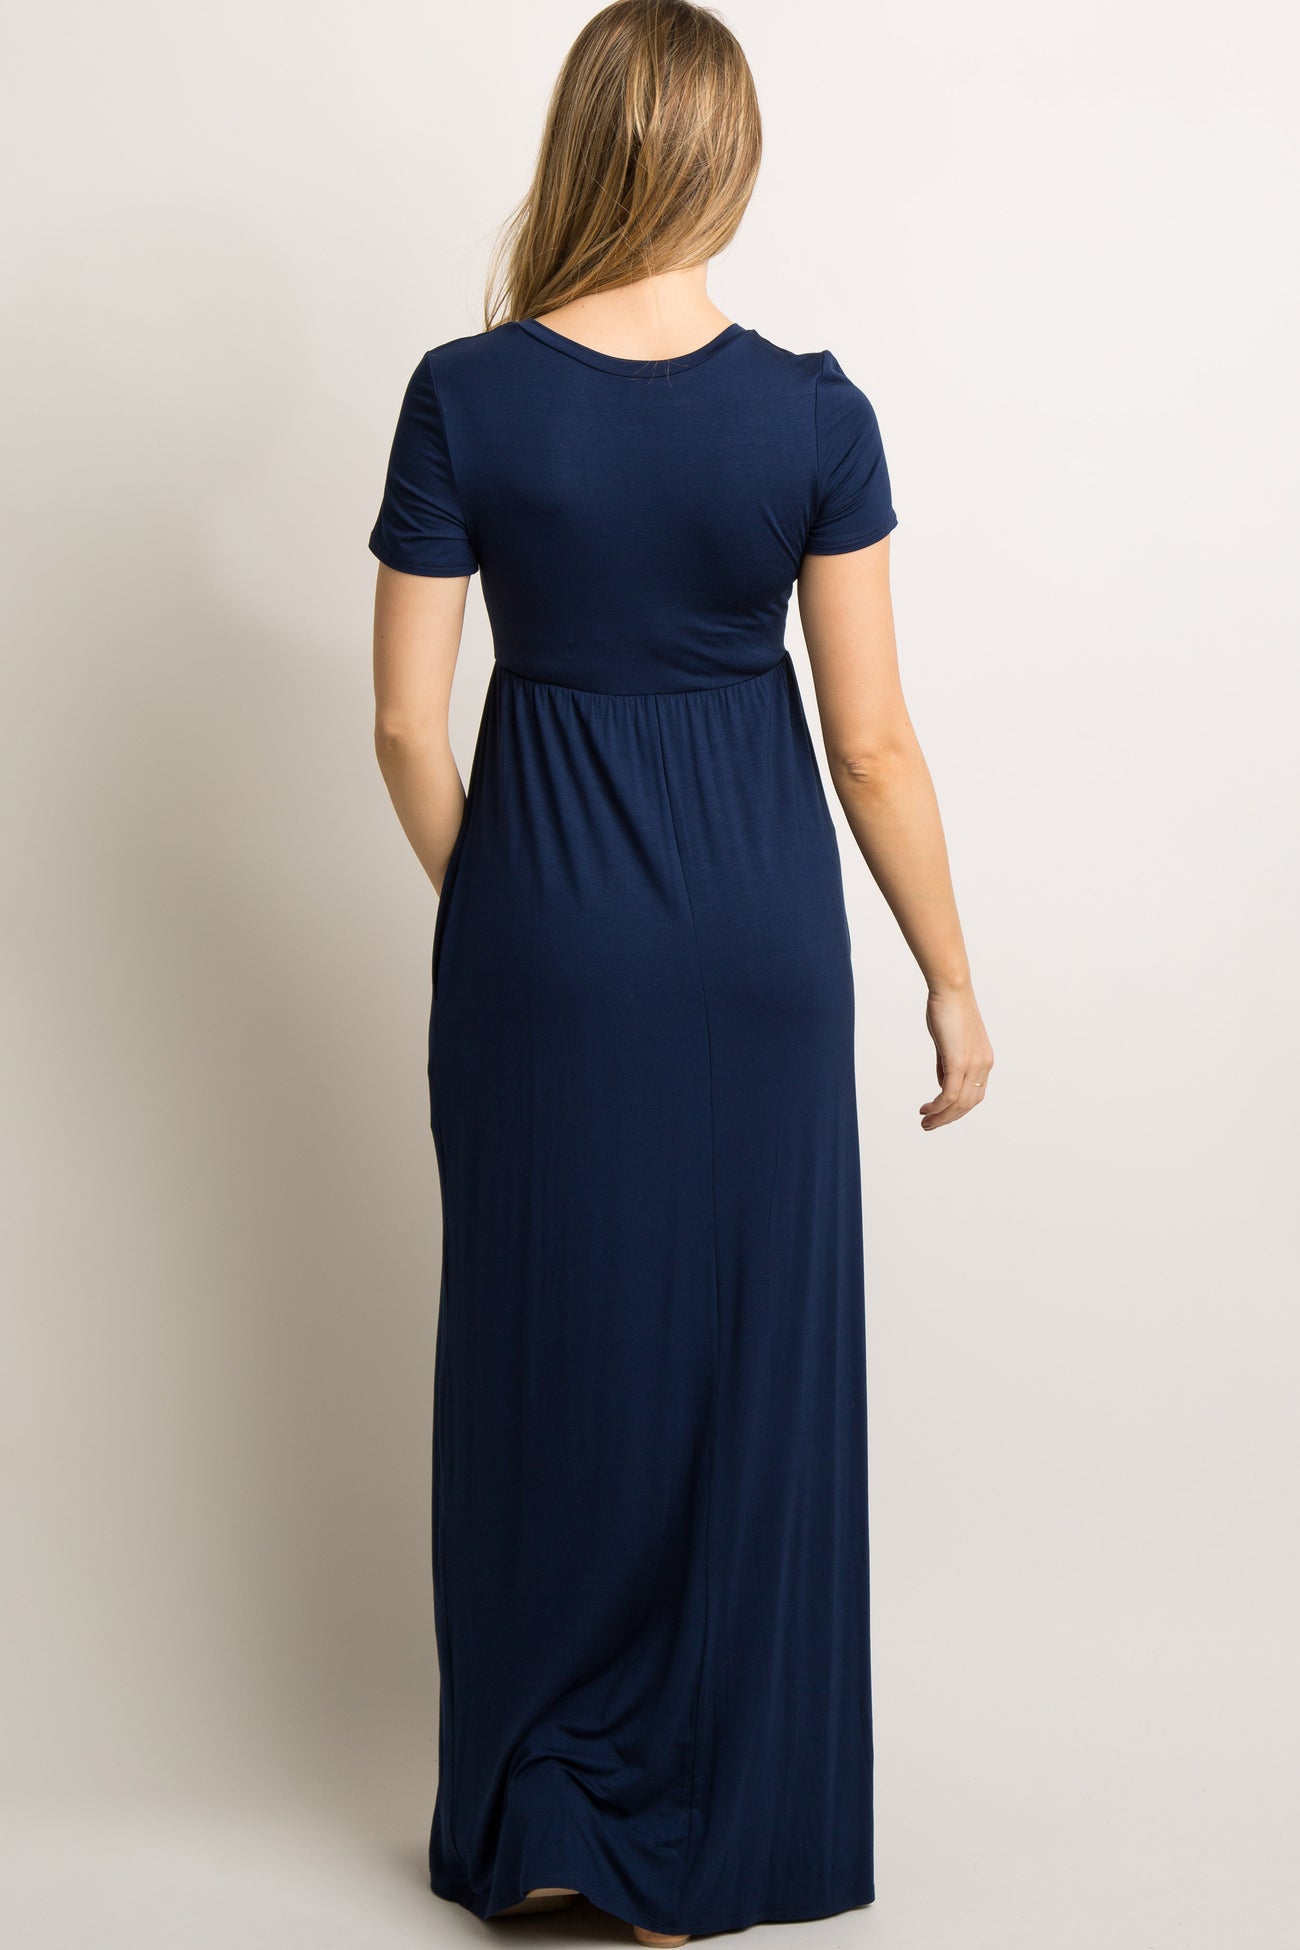 Navy Blue Solid Side Pocket Maternity Maxi Dress– PinkBlush